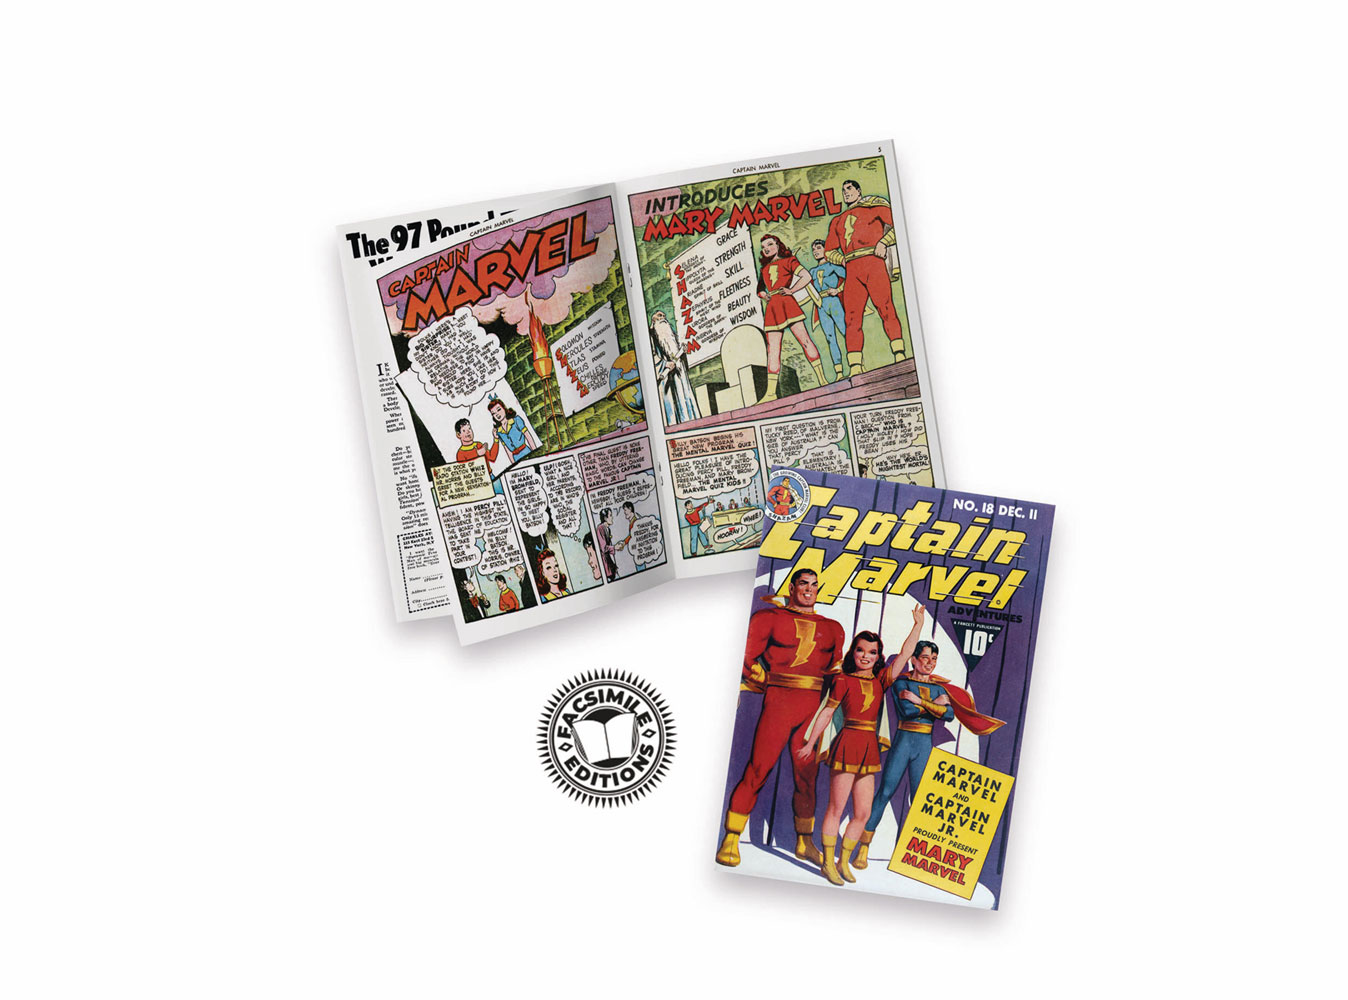 Image: PS Artbooks Facsmile Edition: Captain Marvel Adventures #18 - PS Artbooks